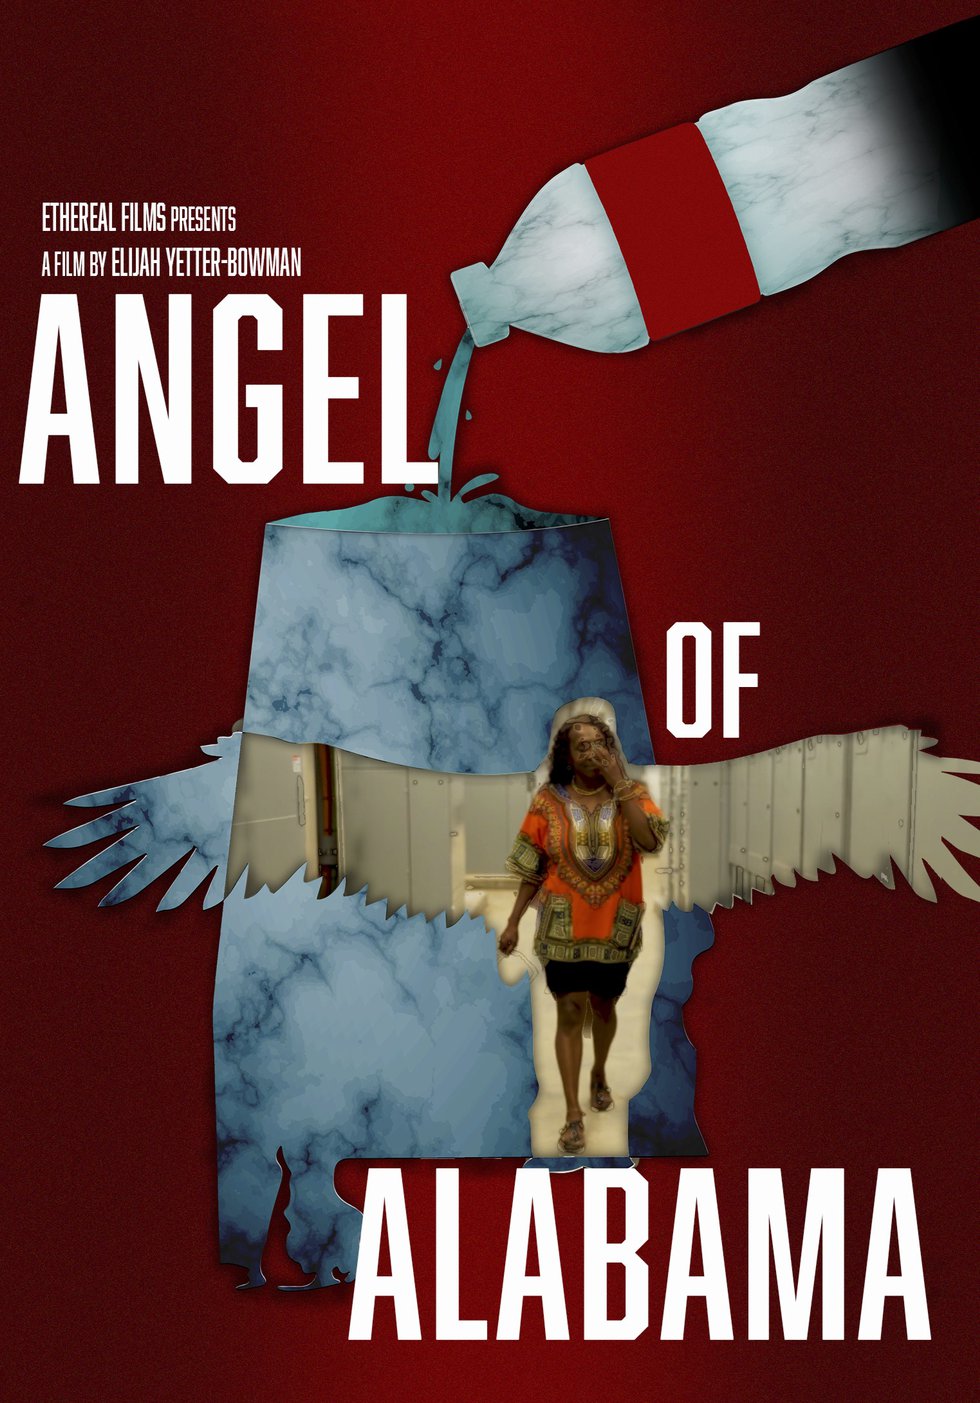 Angel of Alabama Environmental Documentary